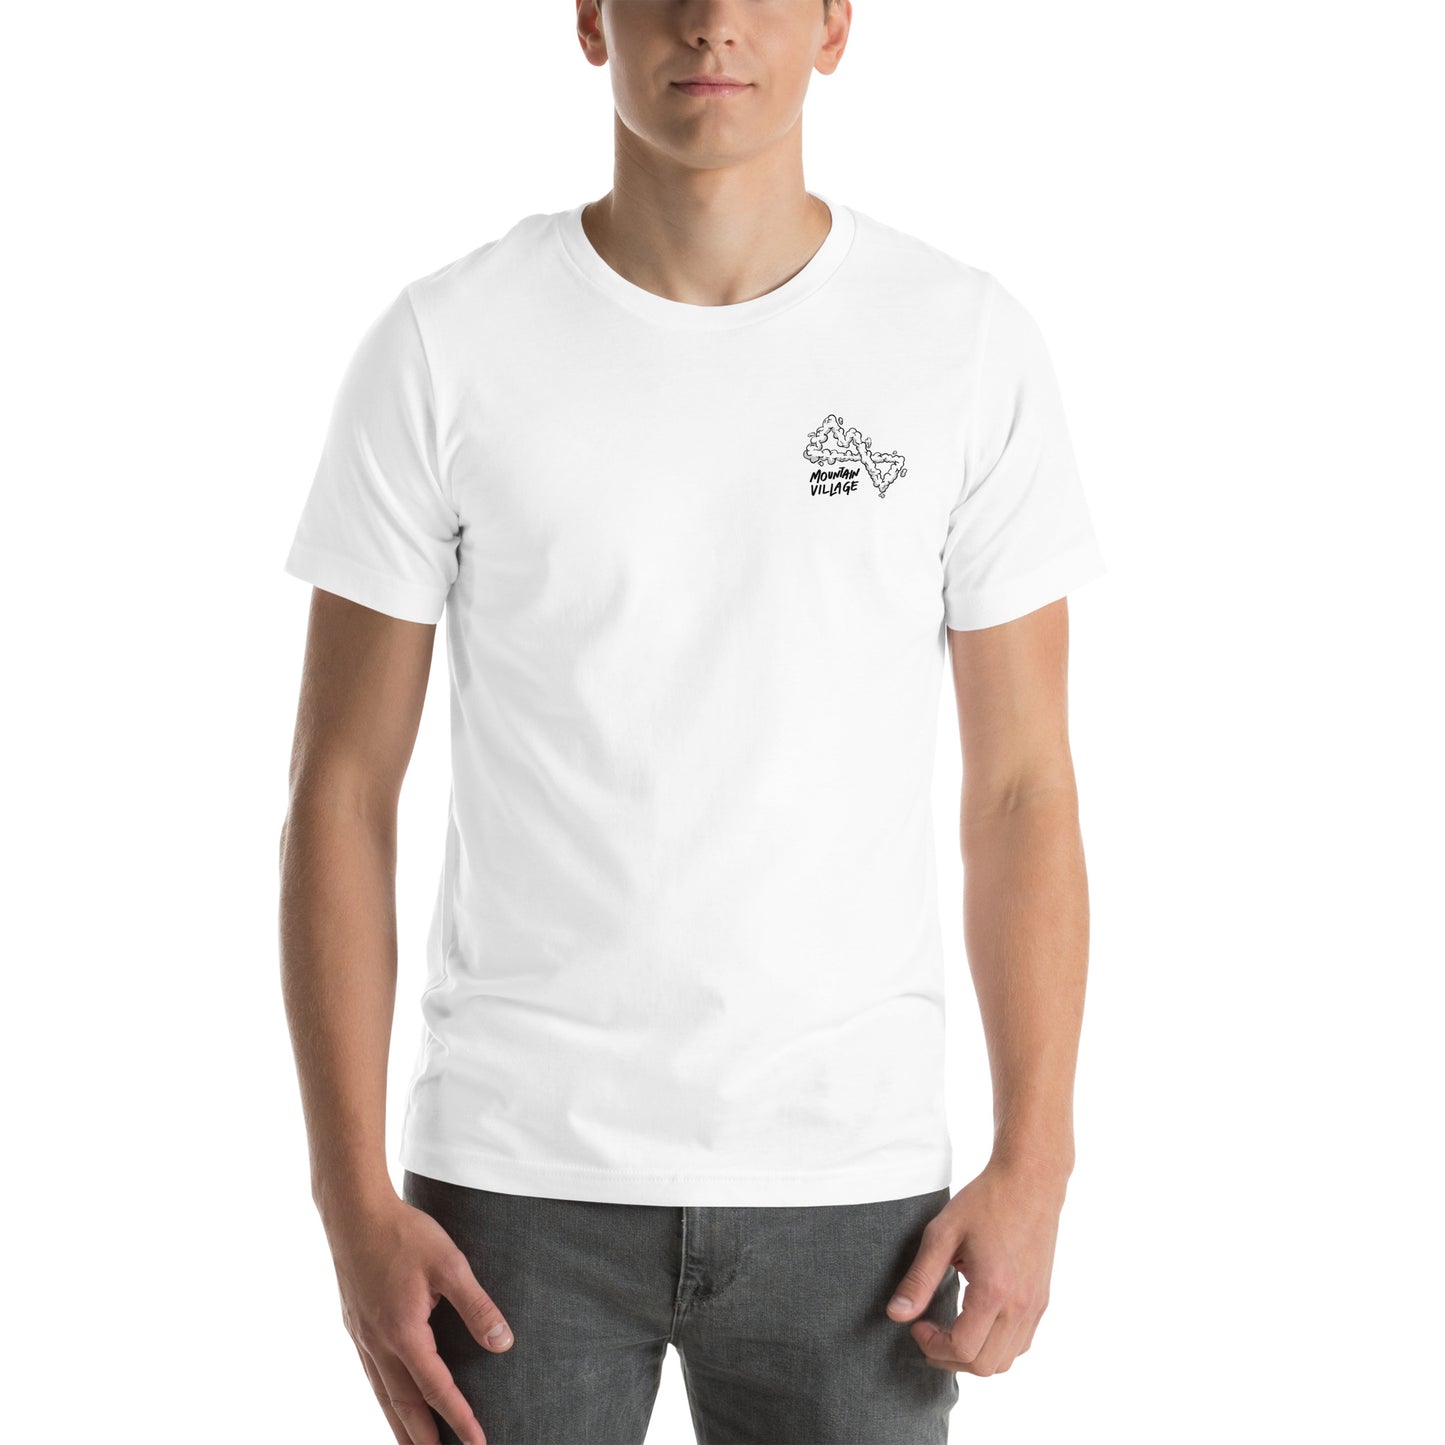 Man modelling white t-shirt facing forwards